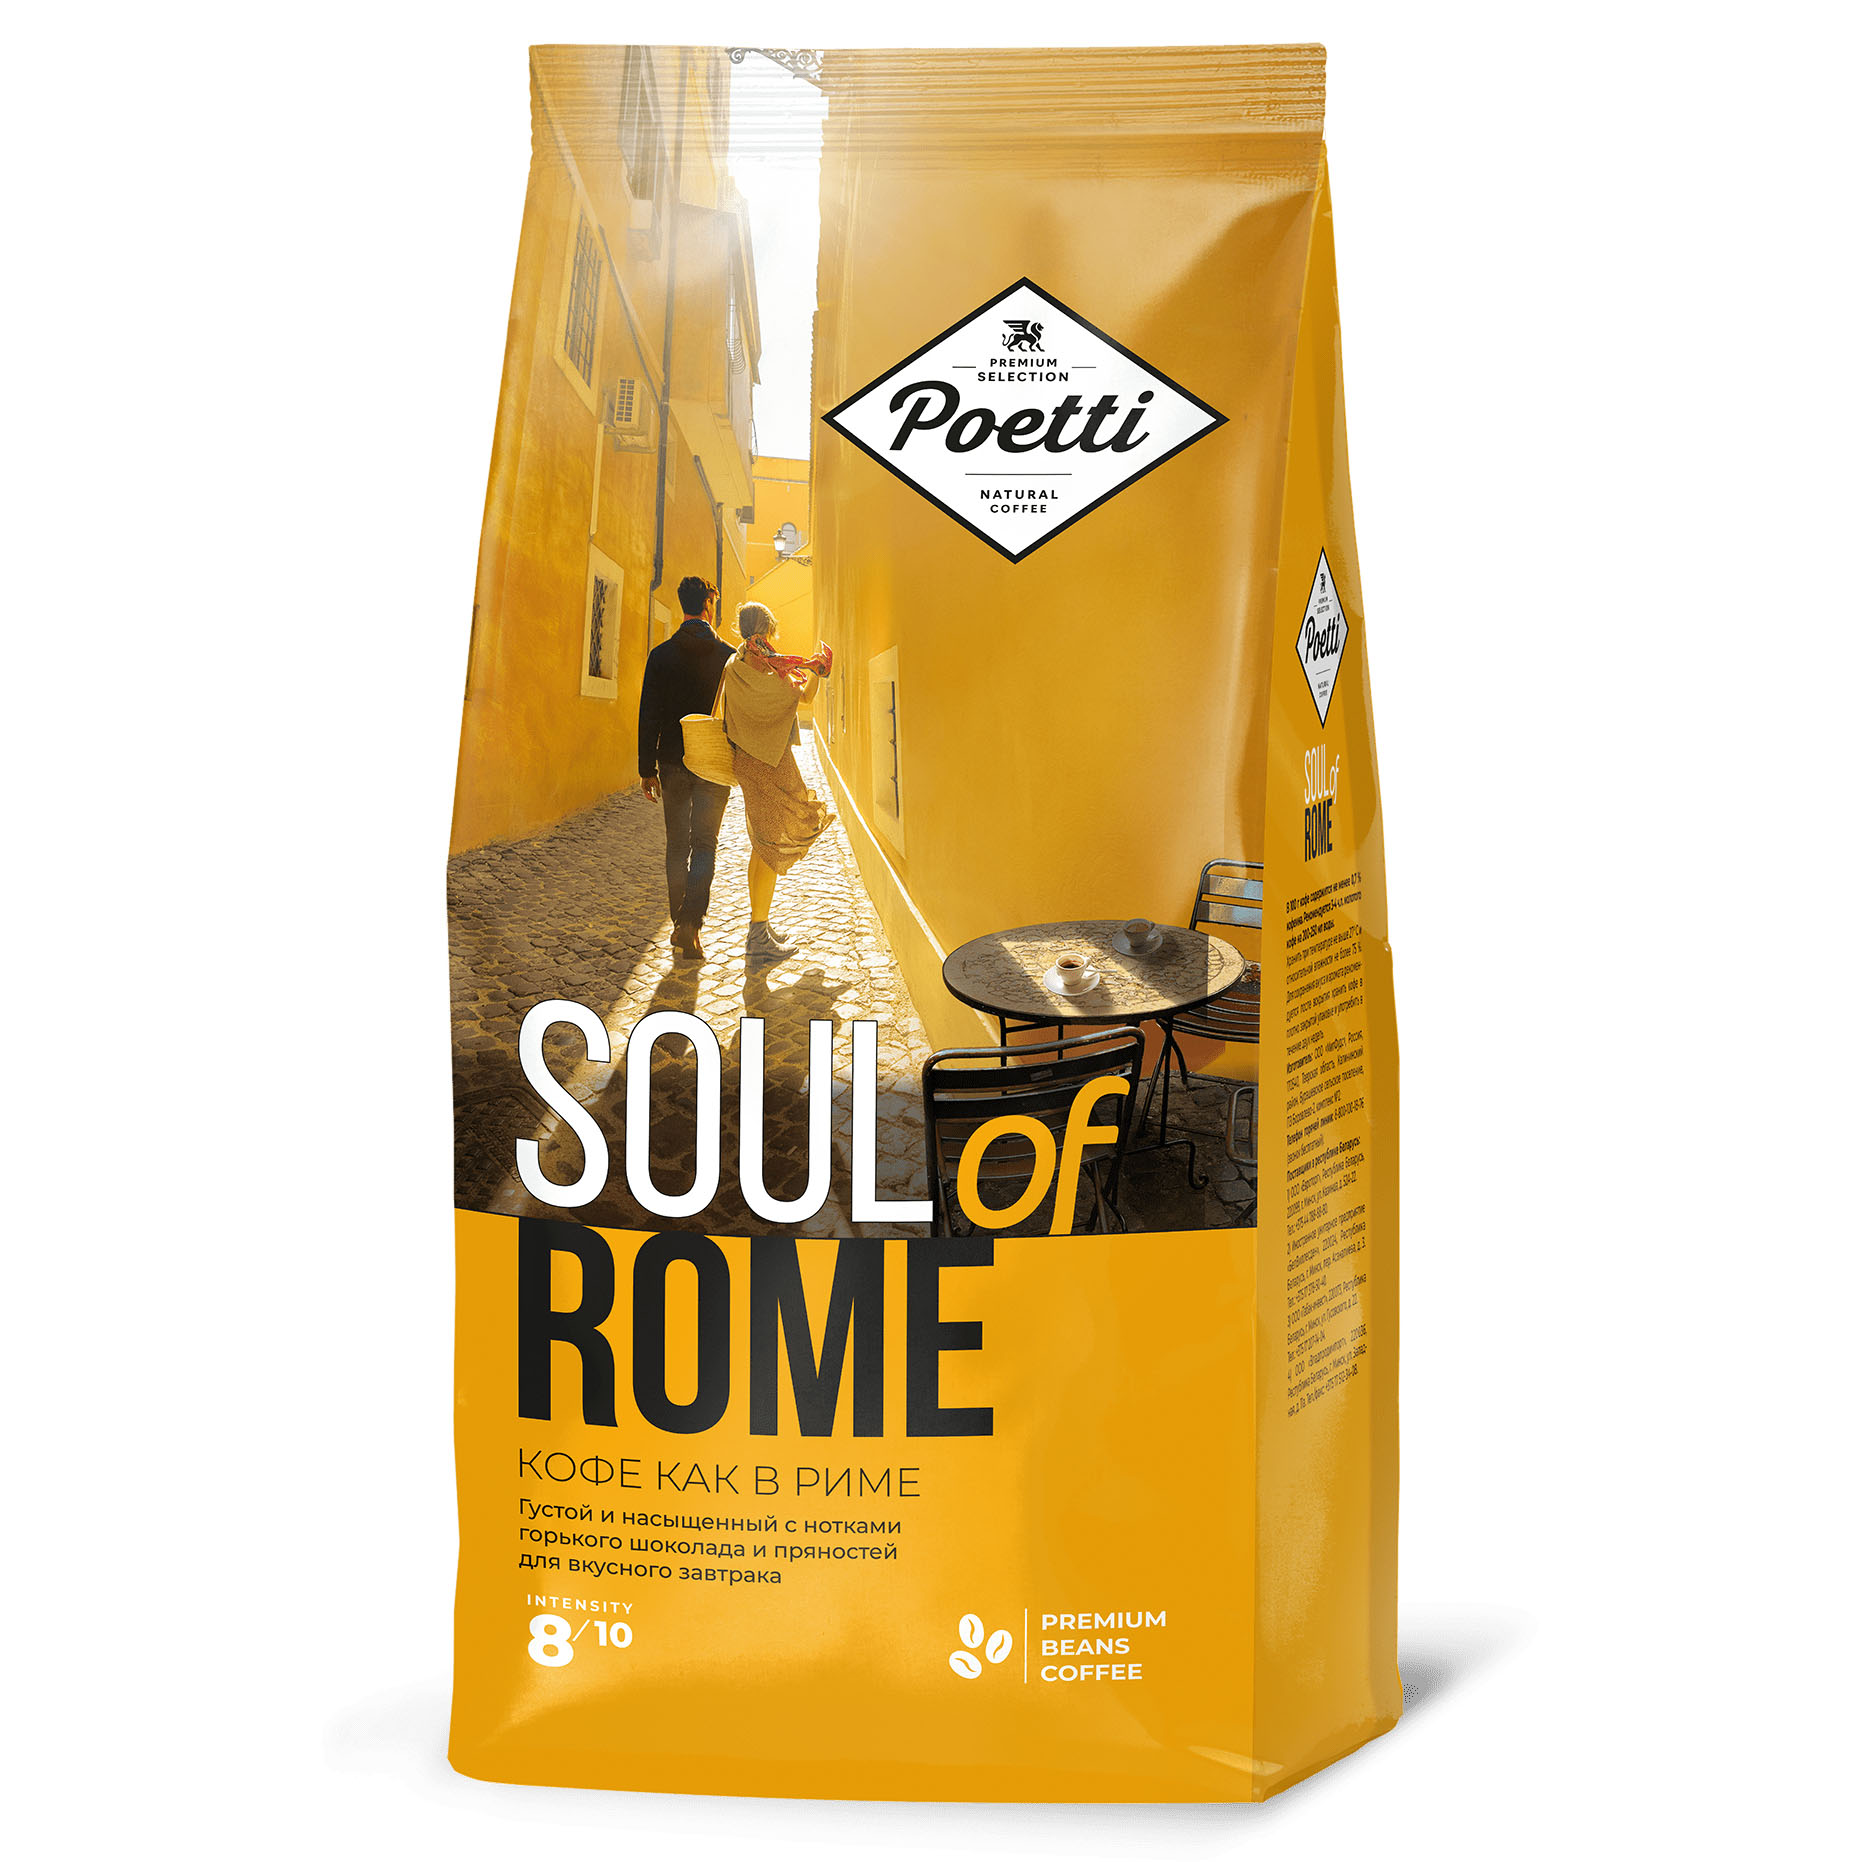 Кофе в зернах Poetti Soul of Rome 800 г кофе в зернах poetti soul of rome 800 г